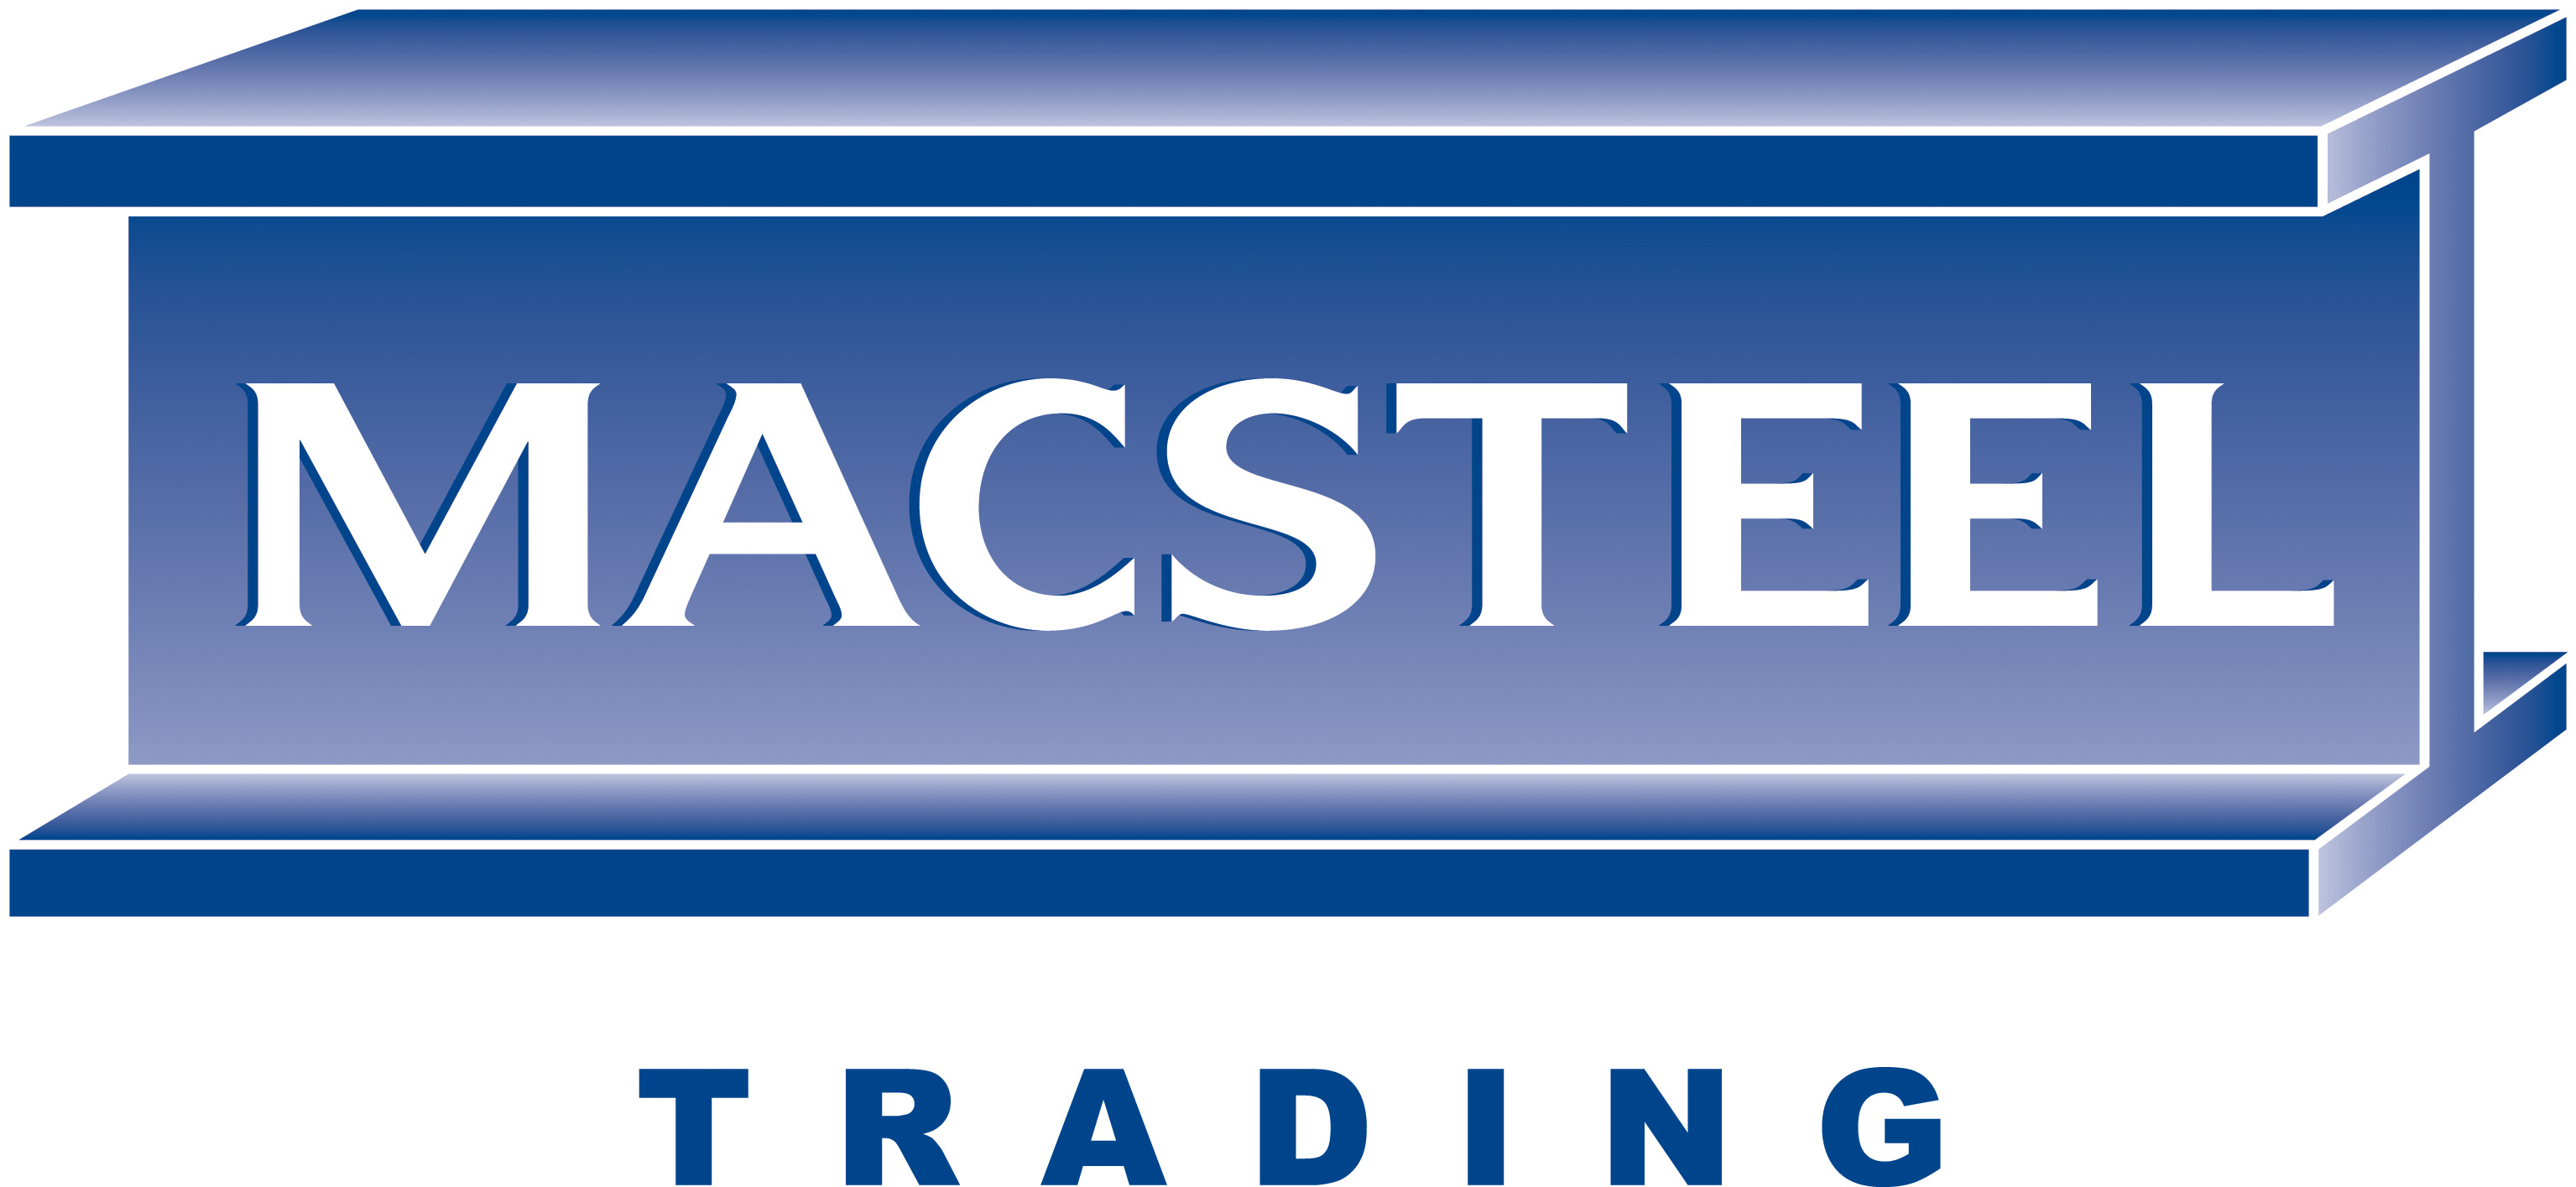 Macsteel Trading - Durban logo